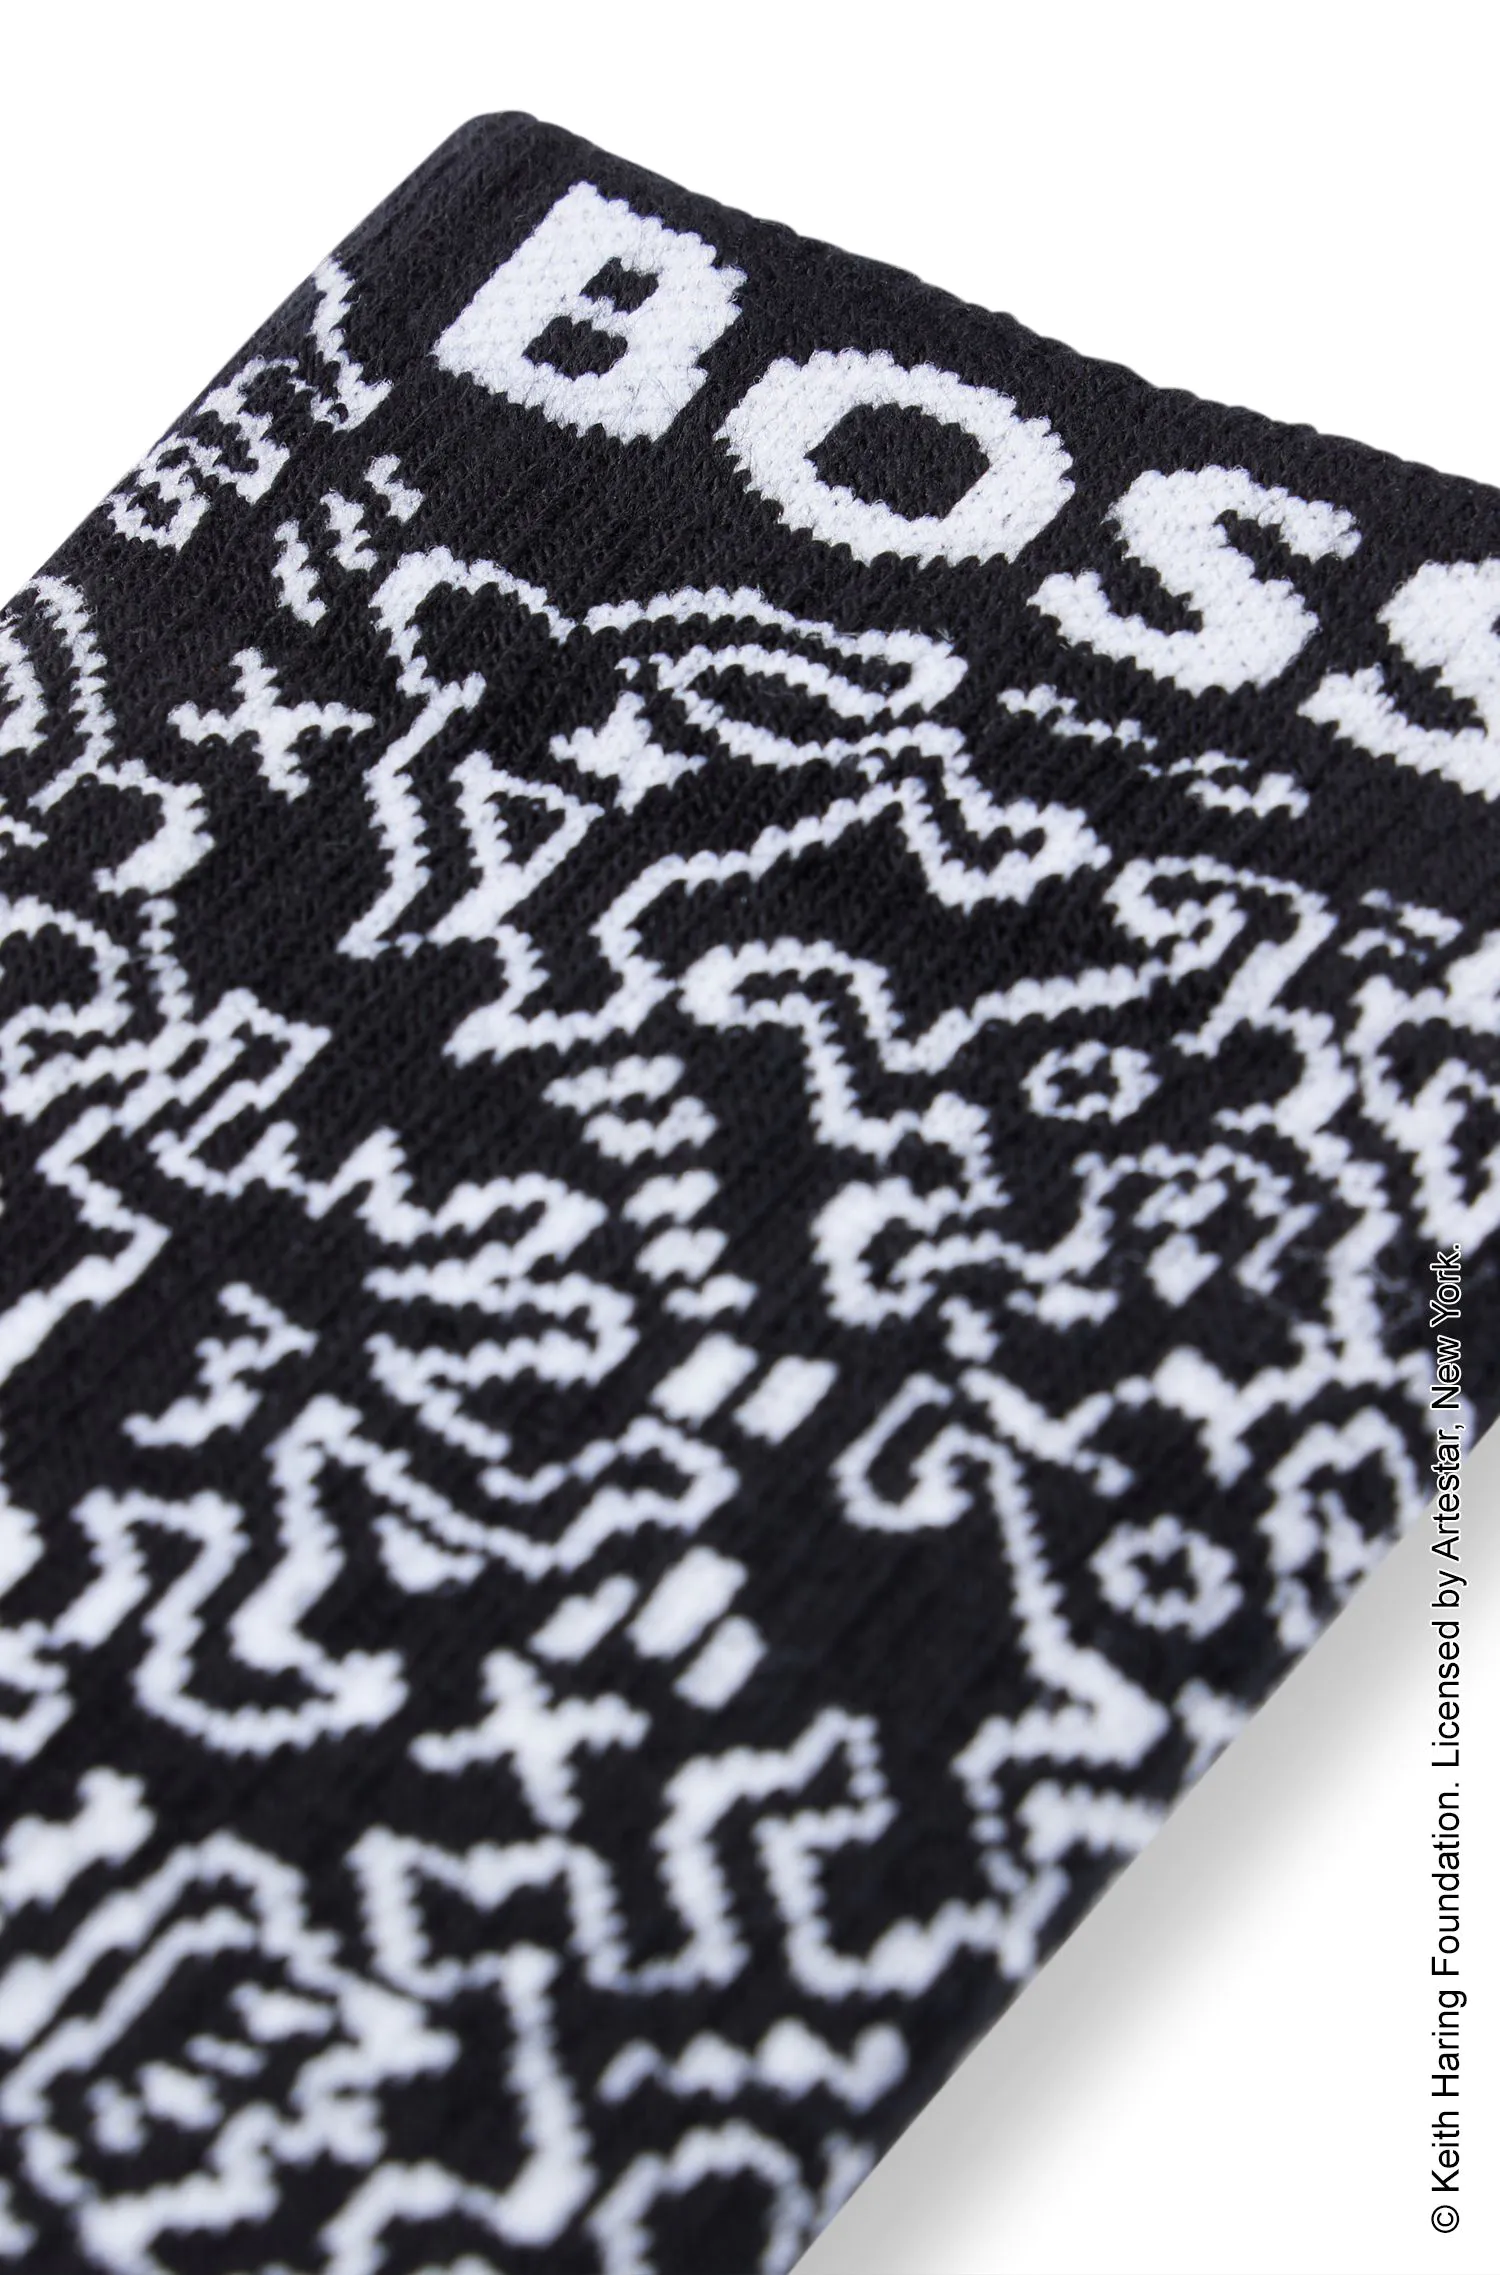 BOSS x Keith Haring 限定图案短袜